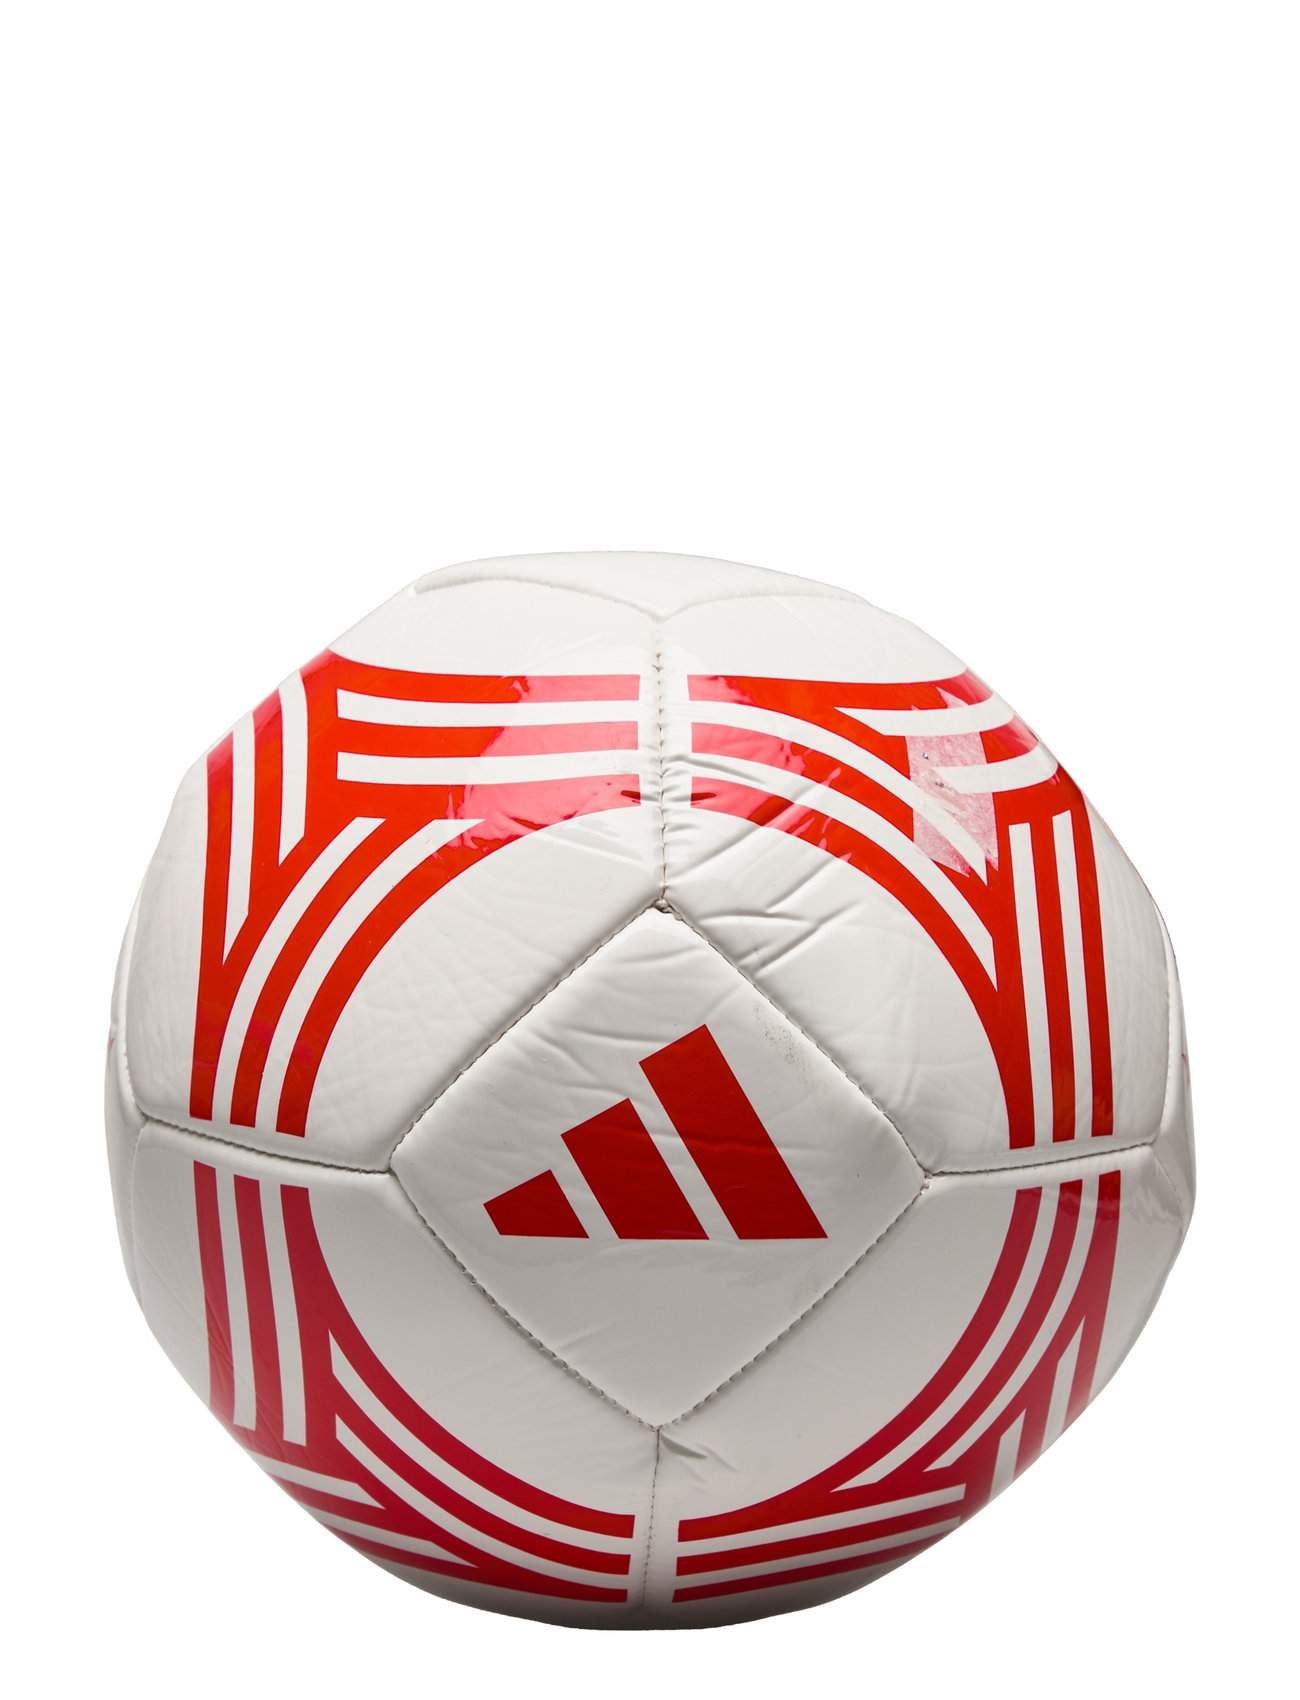 Fc Bayern Home Club Football Sport Sports Equipment Football Equipment Football Balls Red Adidas Performance